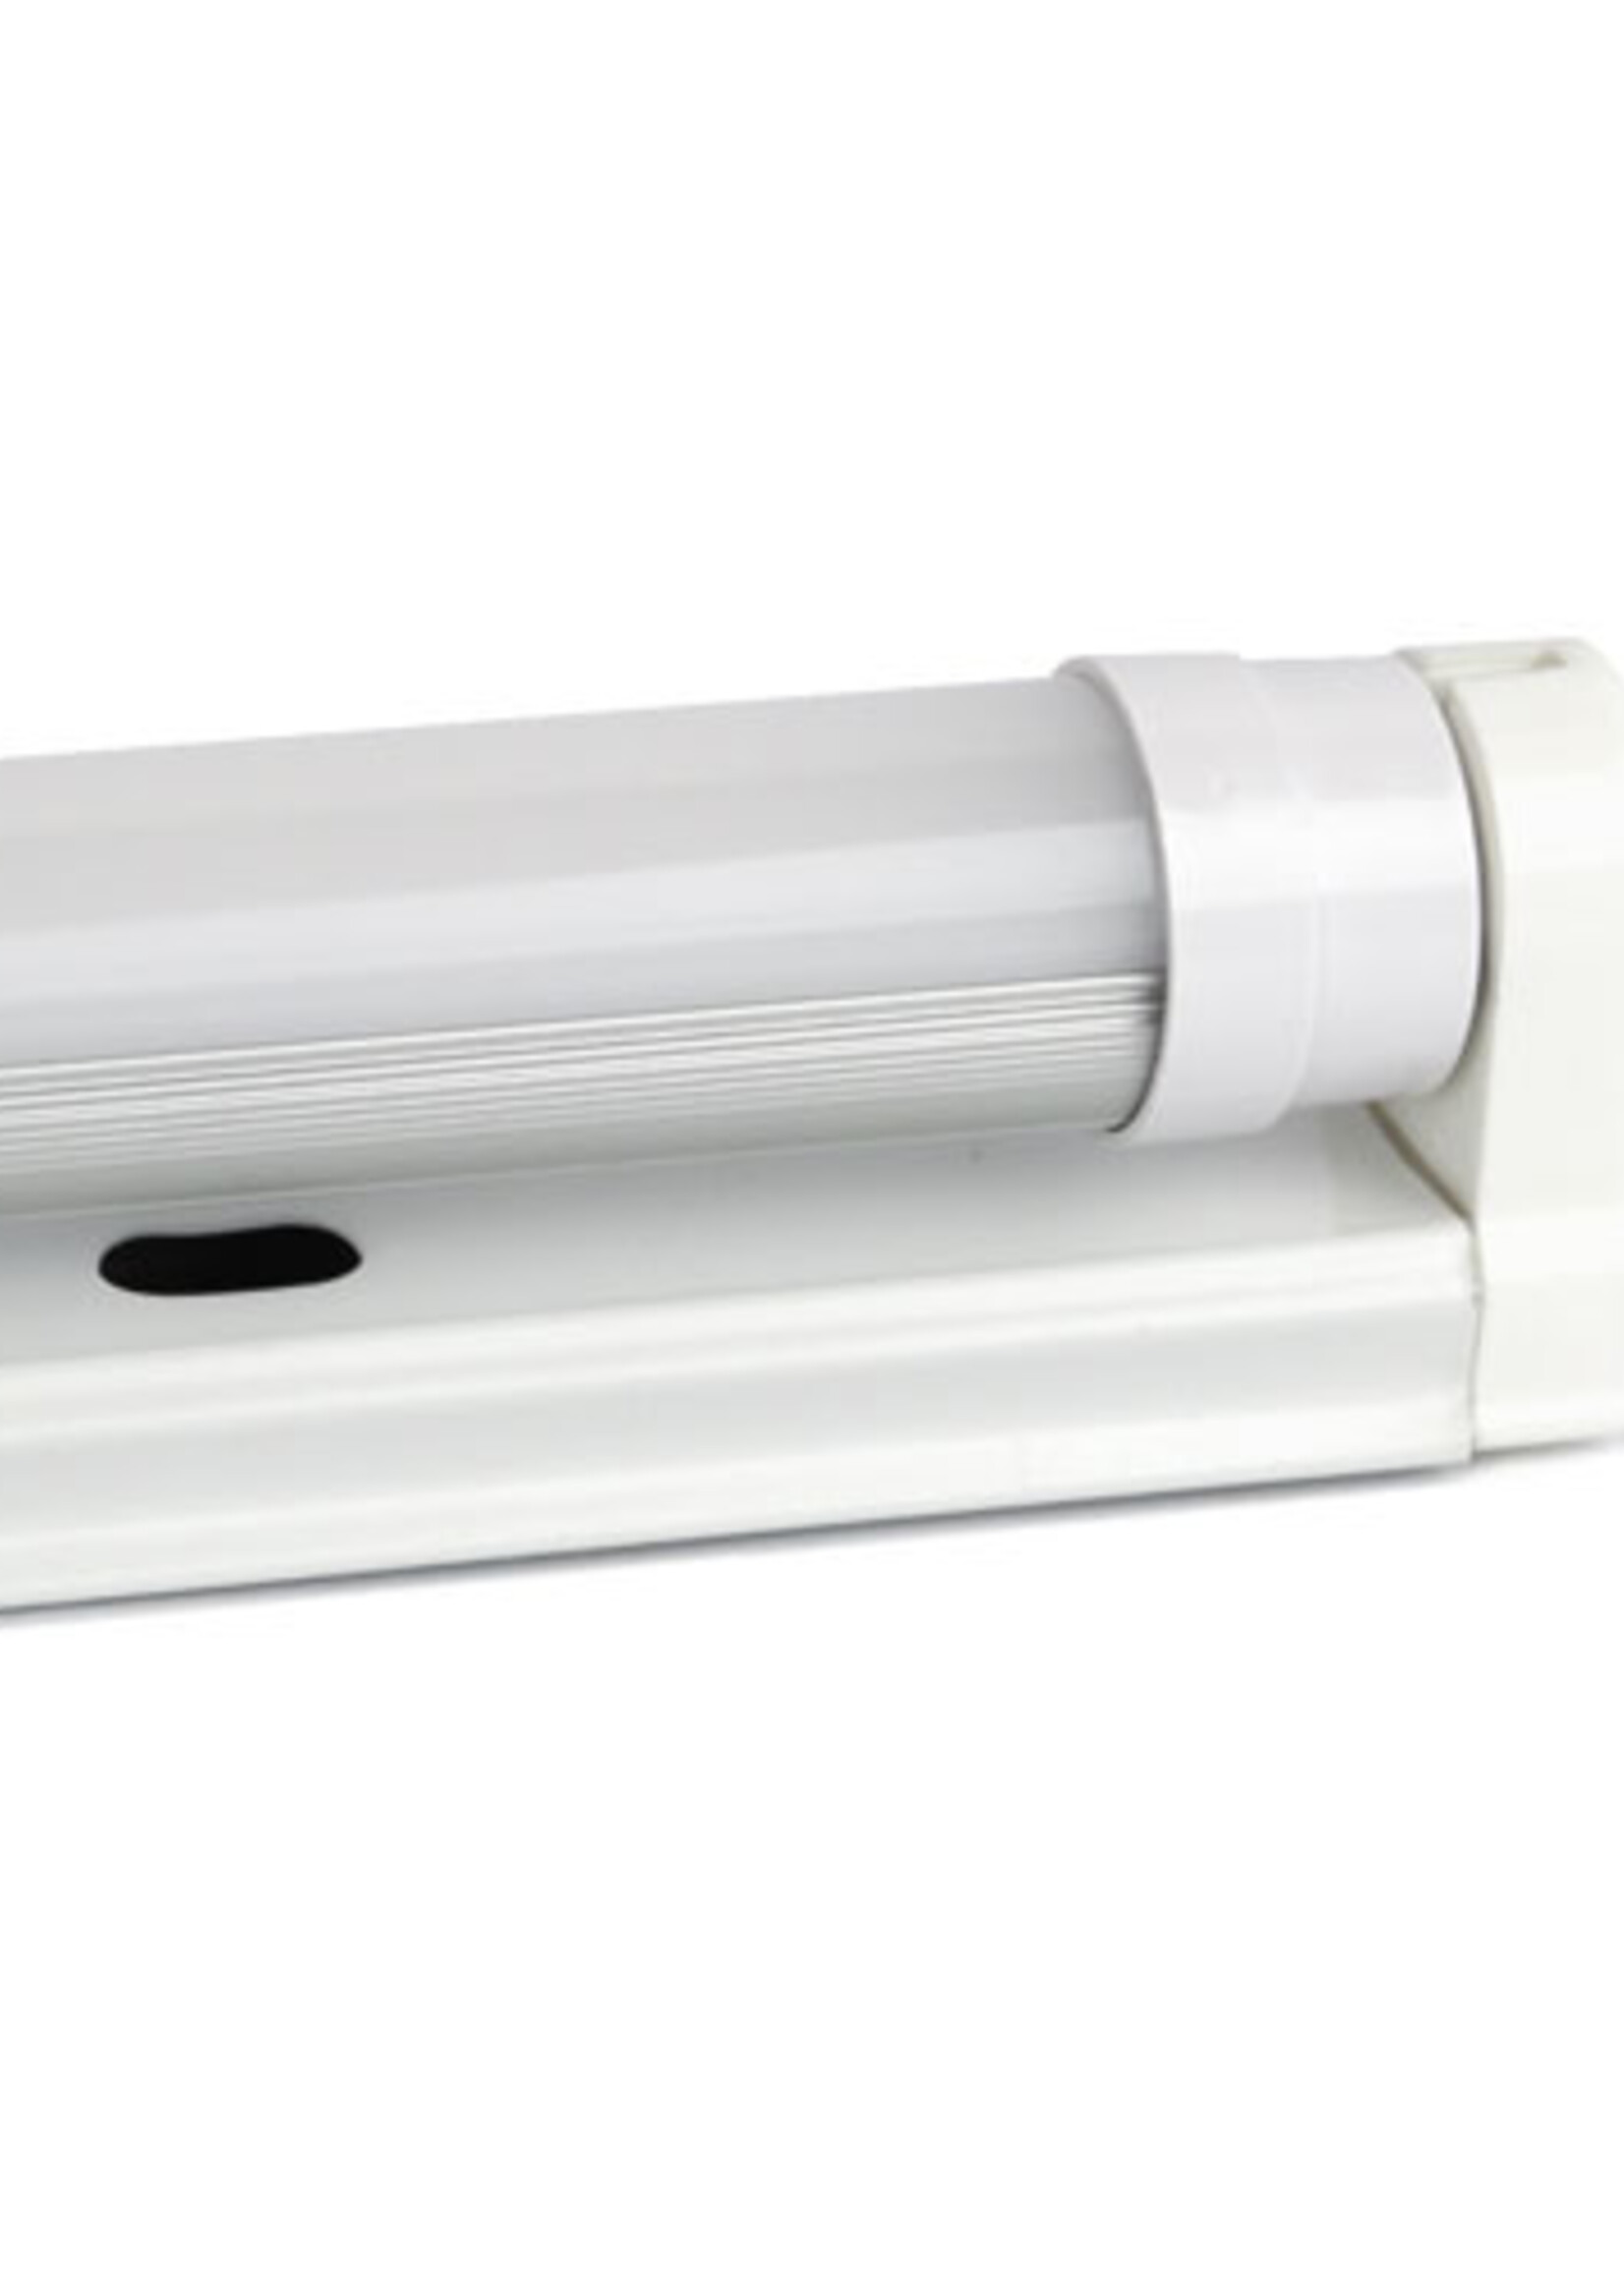 LEDWINKEL-Online LED Tube Light T8 150cm 25W 160lm/W - Ultra High lumen